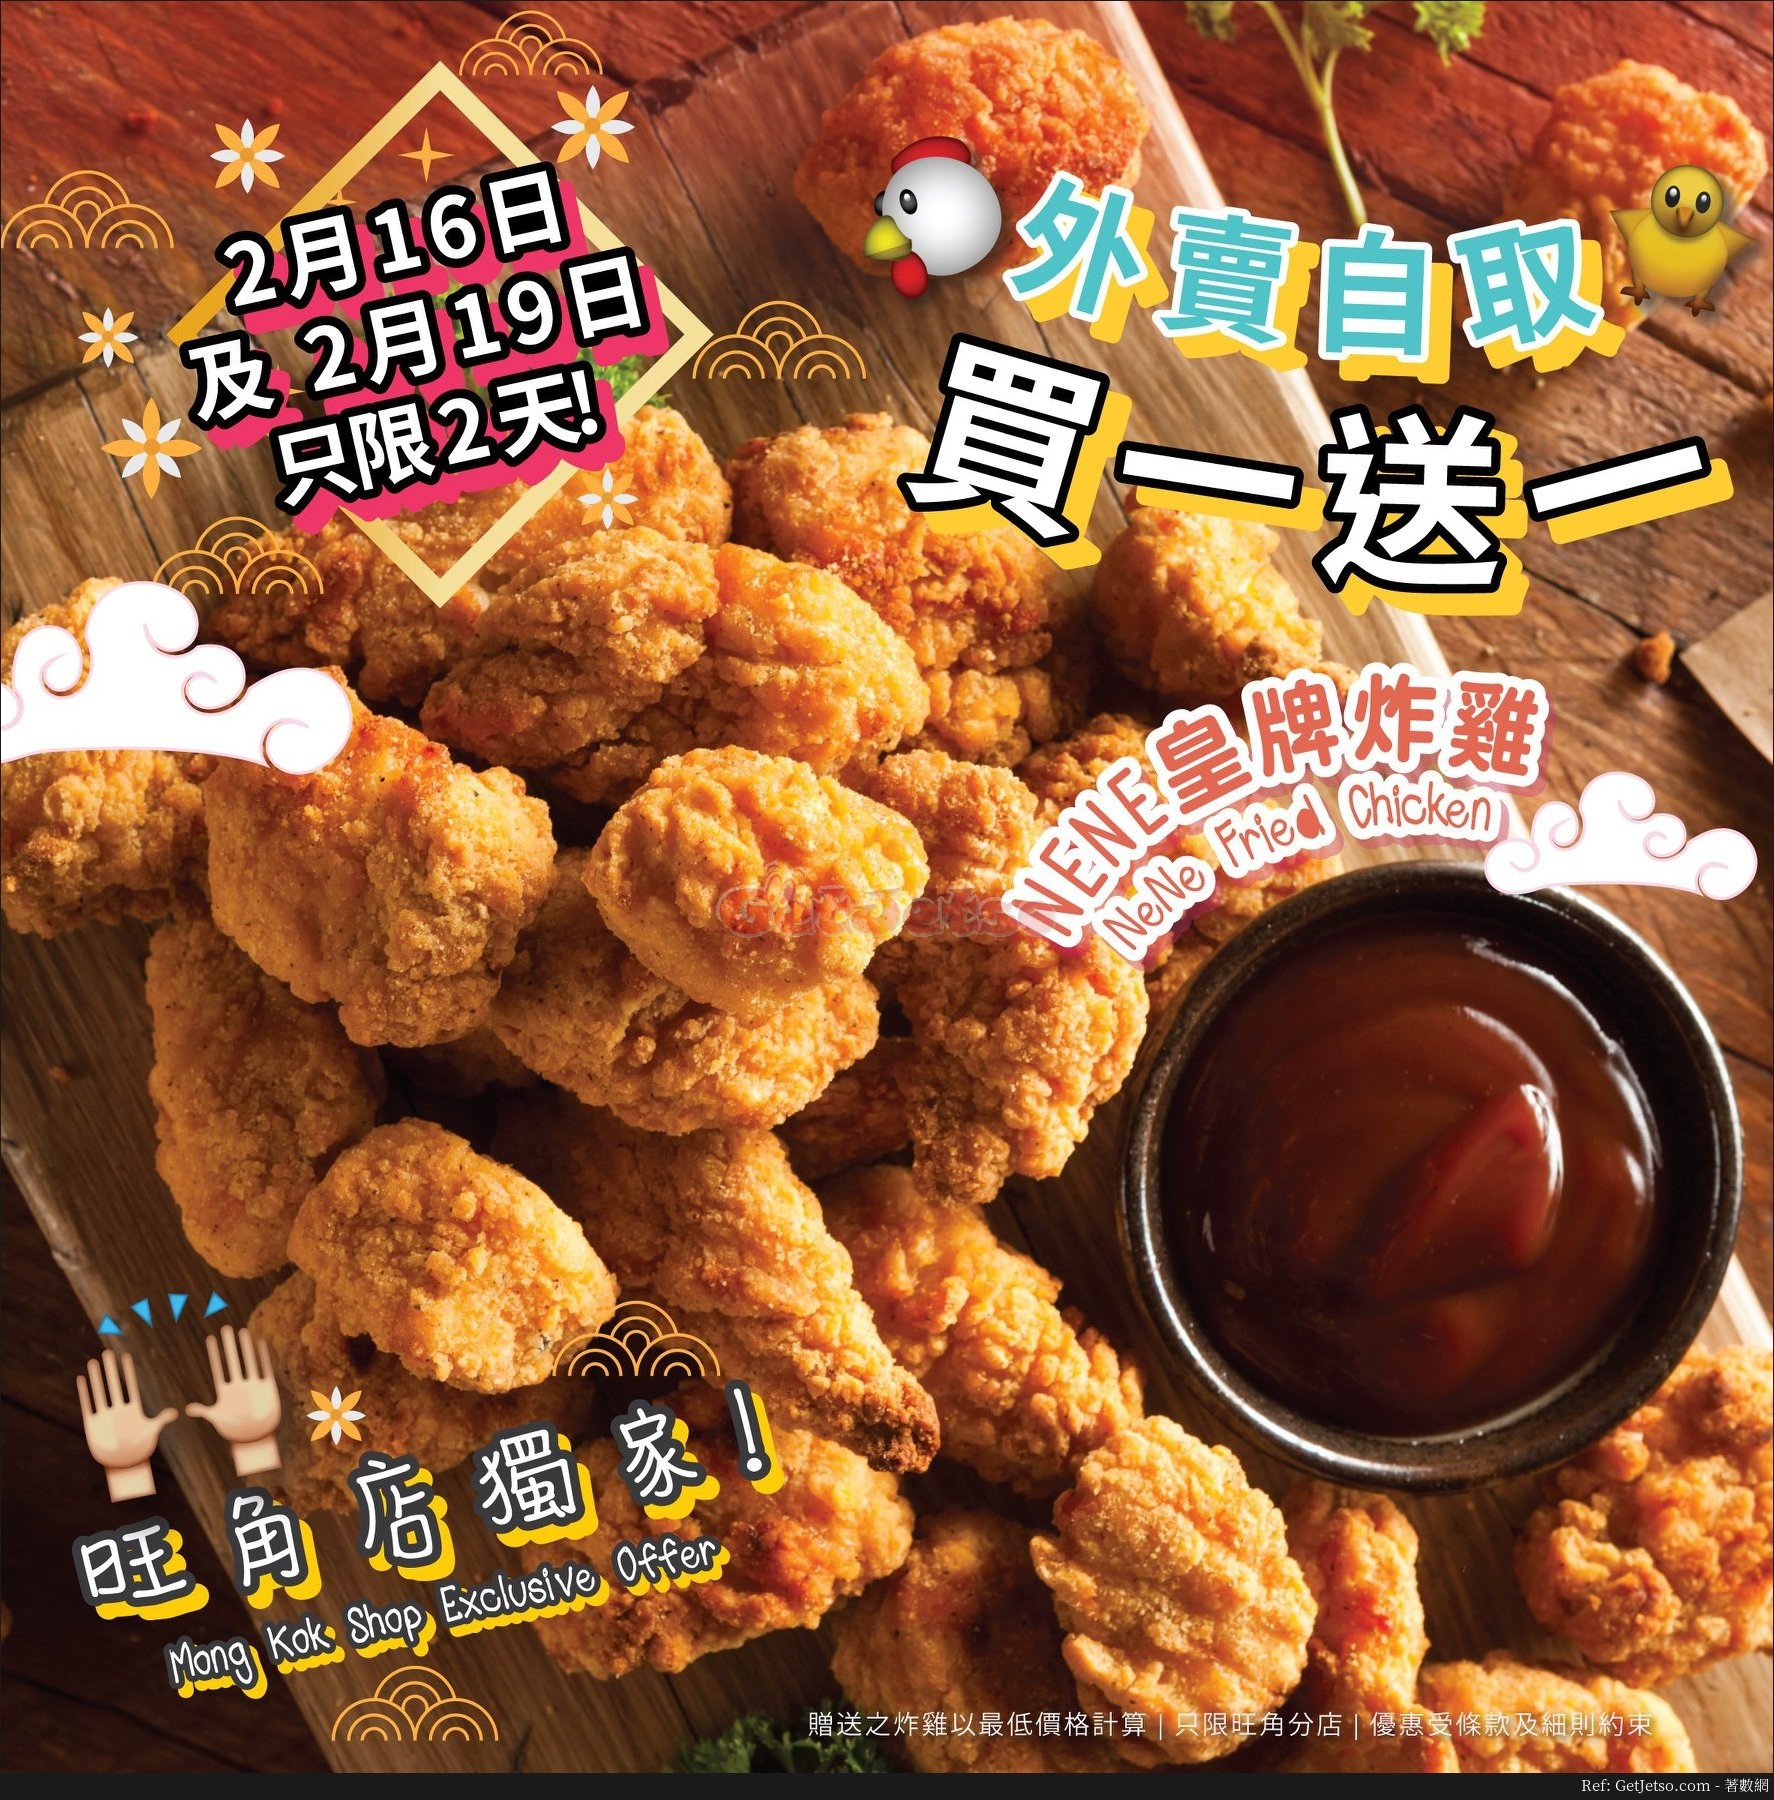 NeNe Chicken 炸雞外賣買1送1優惠@旺角店(至18年2月16、19日)圖片1